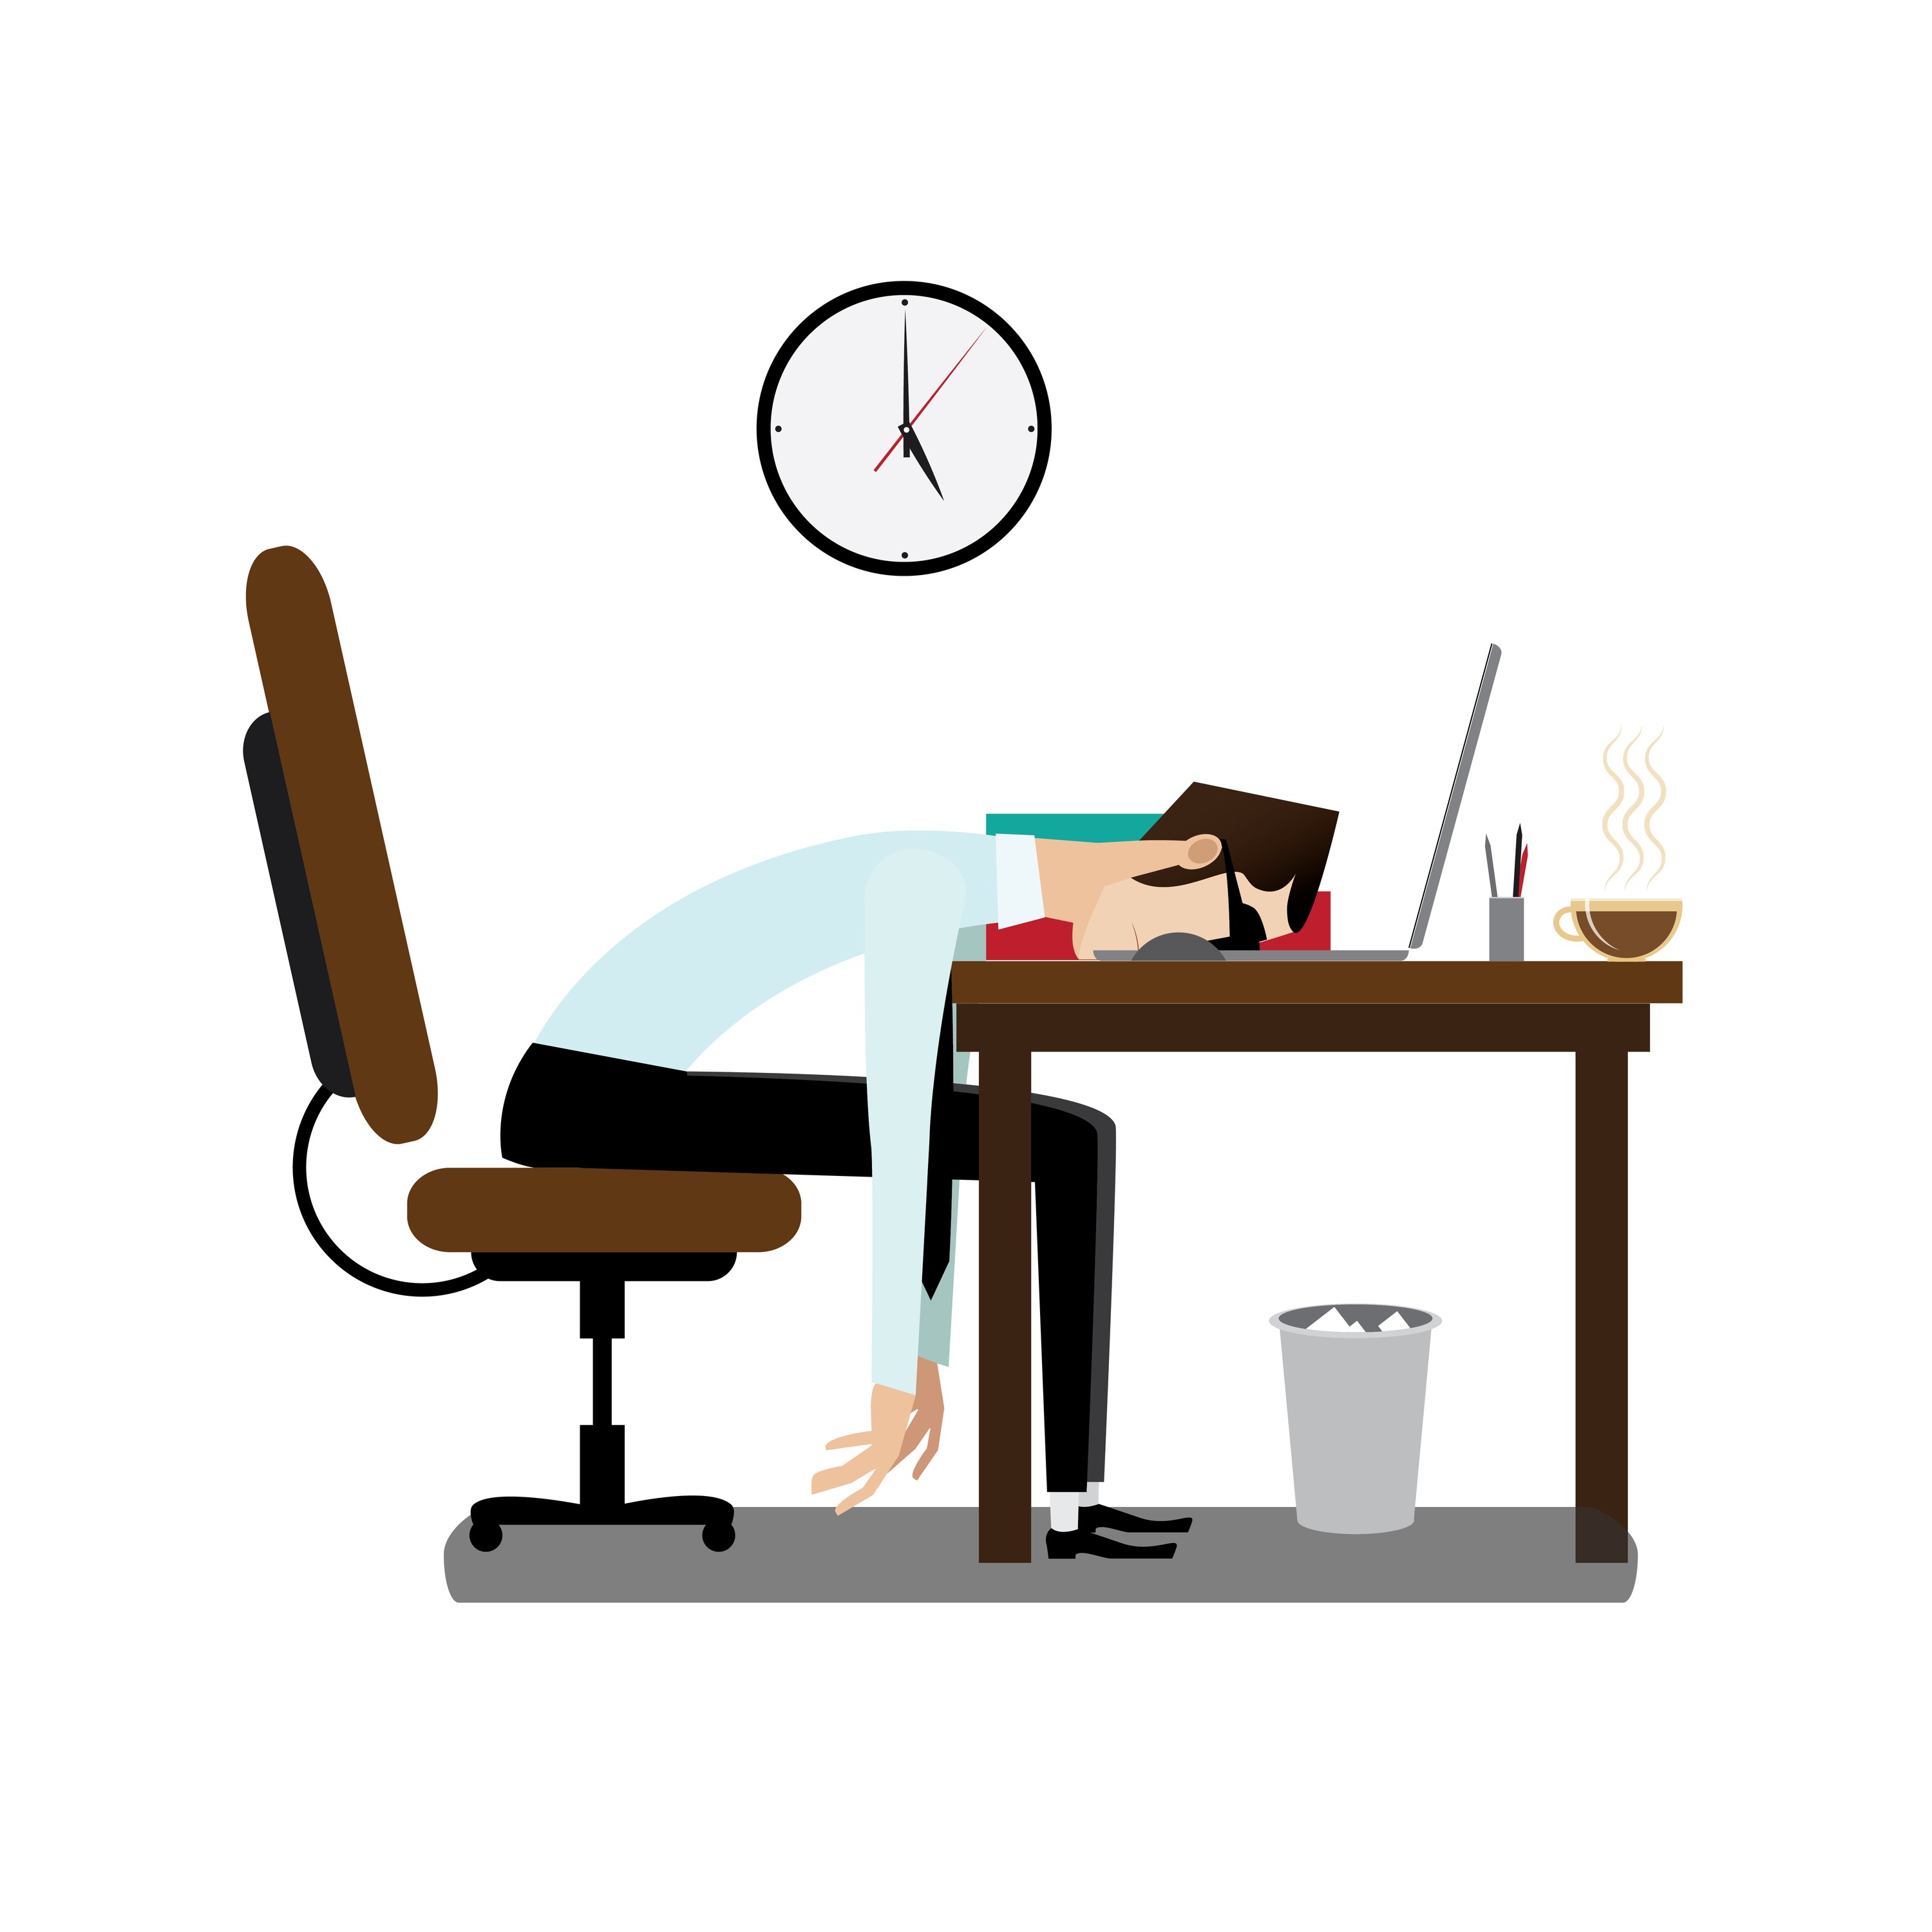 bigstock-Tired-office-man-sleeping-at-d-92484548.jpg